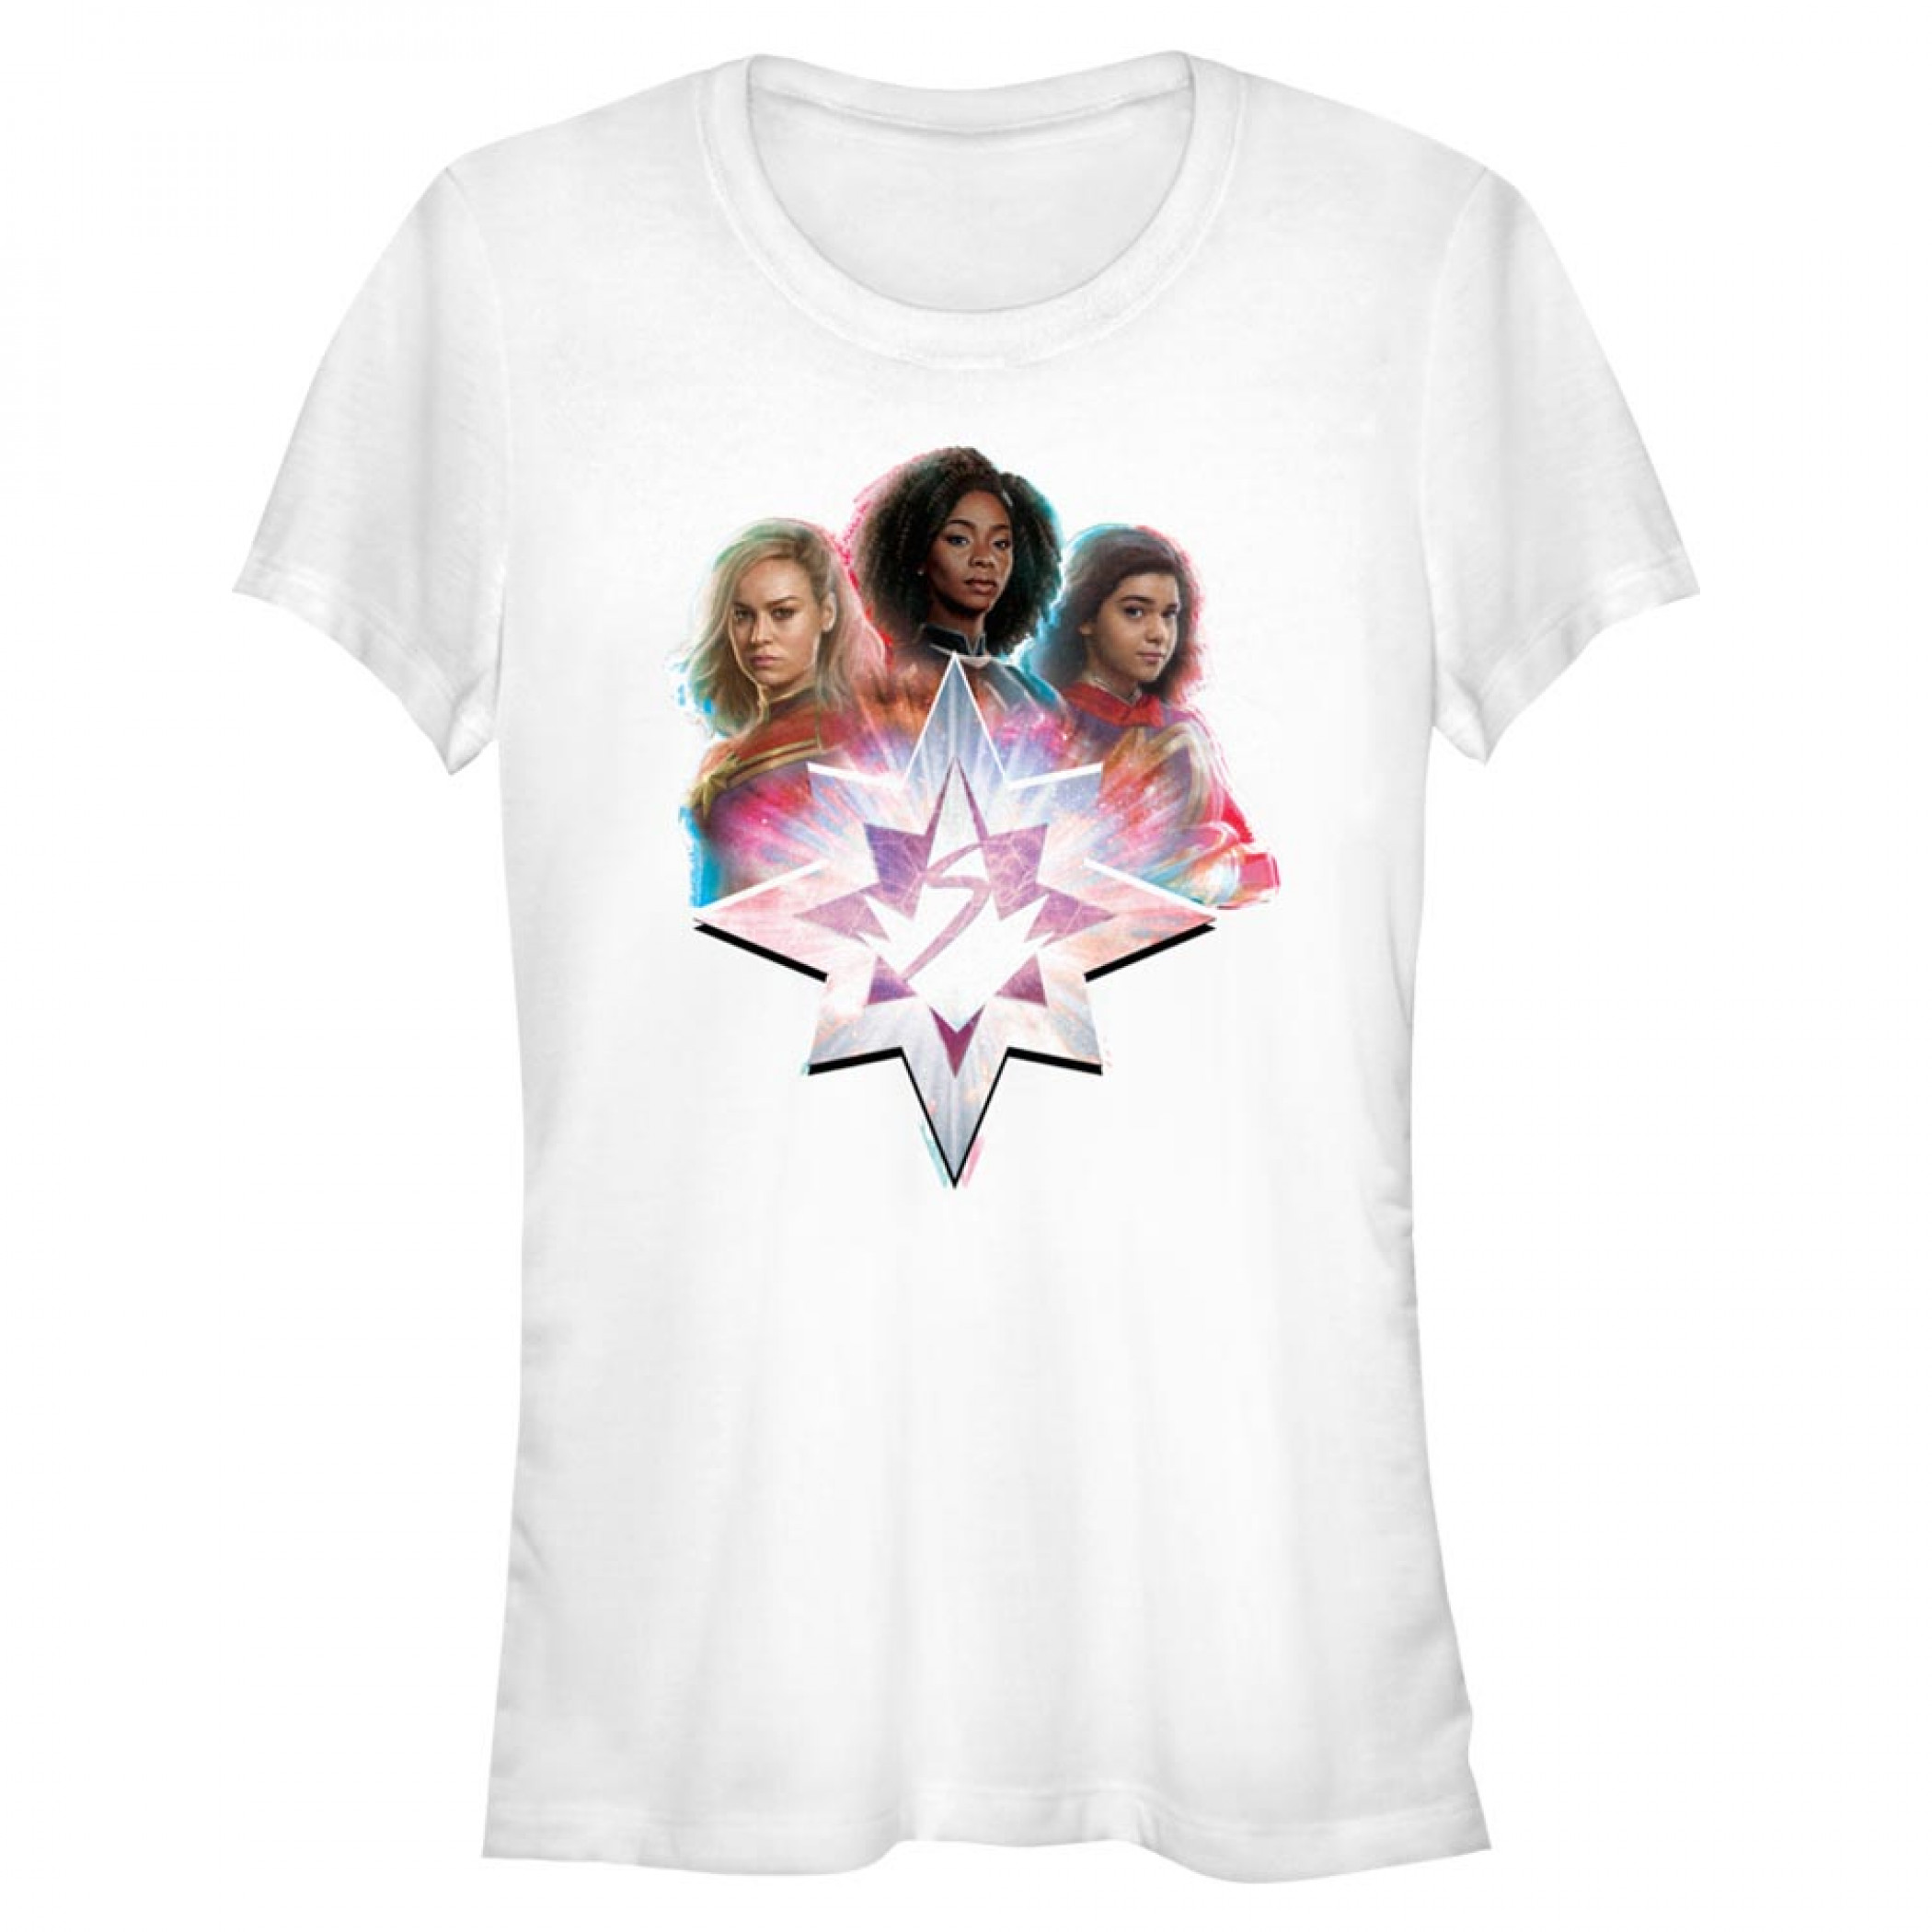 Marvel Girls Glitched Junior's Crew T-Shirt